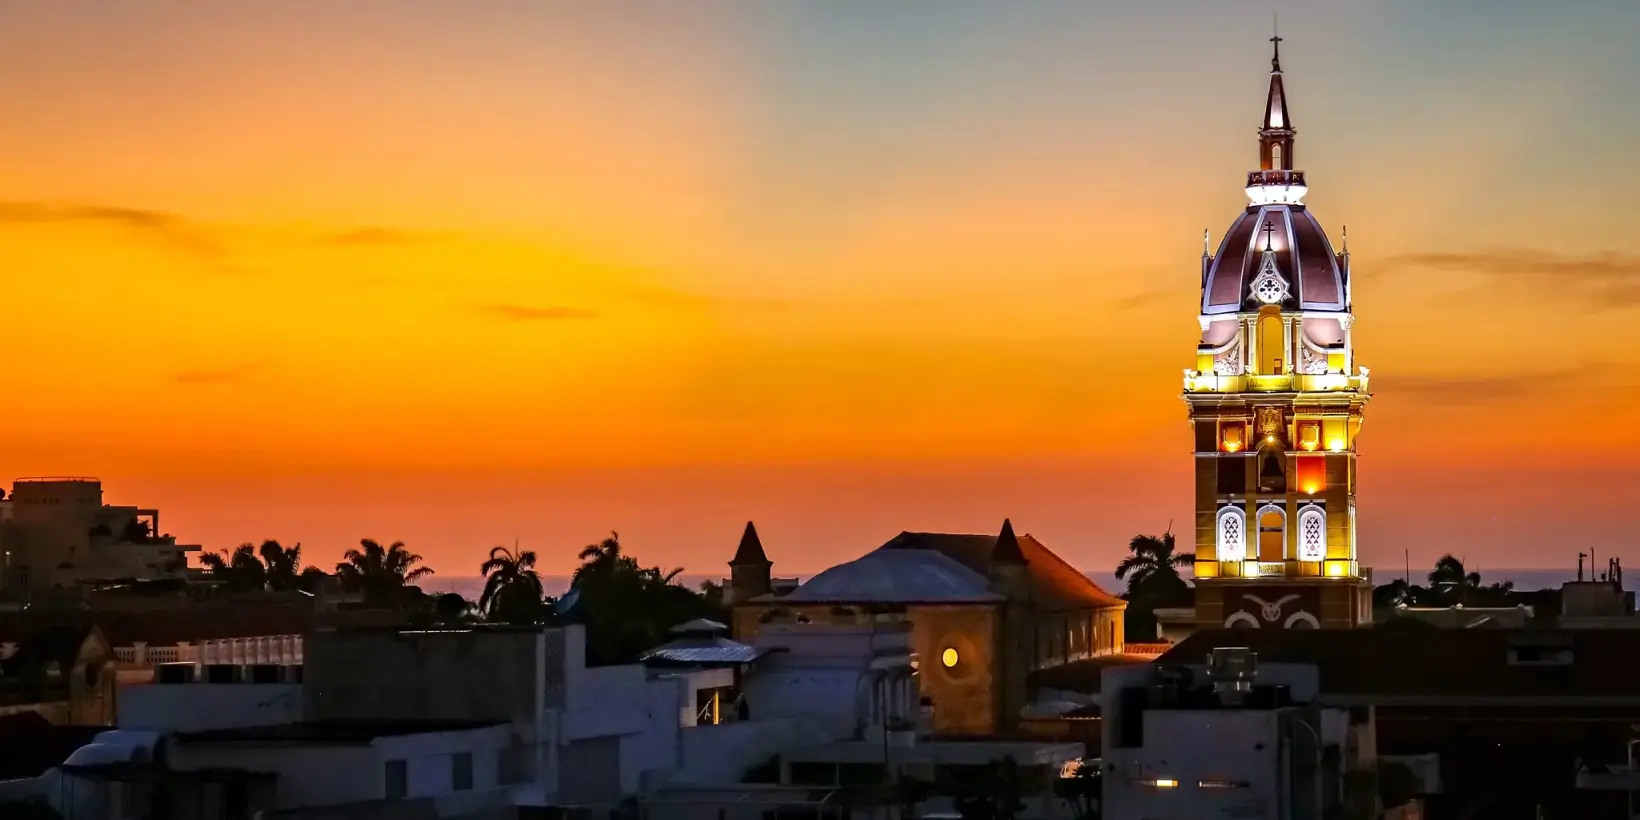 Sunset over Cartagena cathedral against orange sky.